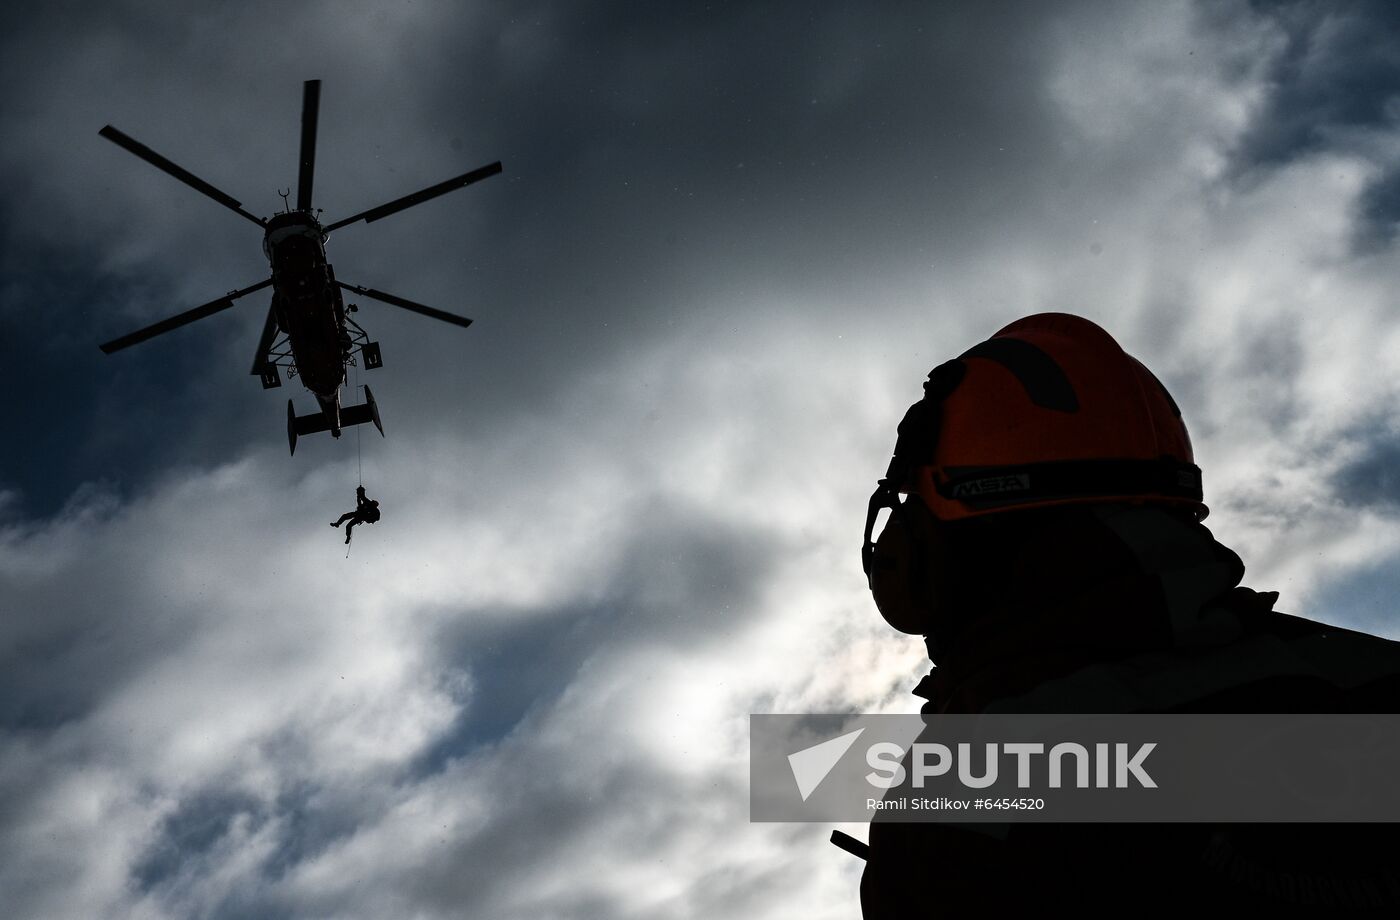 Russia Air Rescue Drills